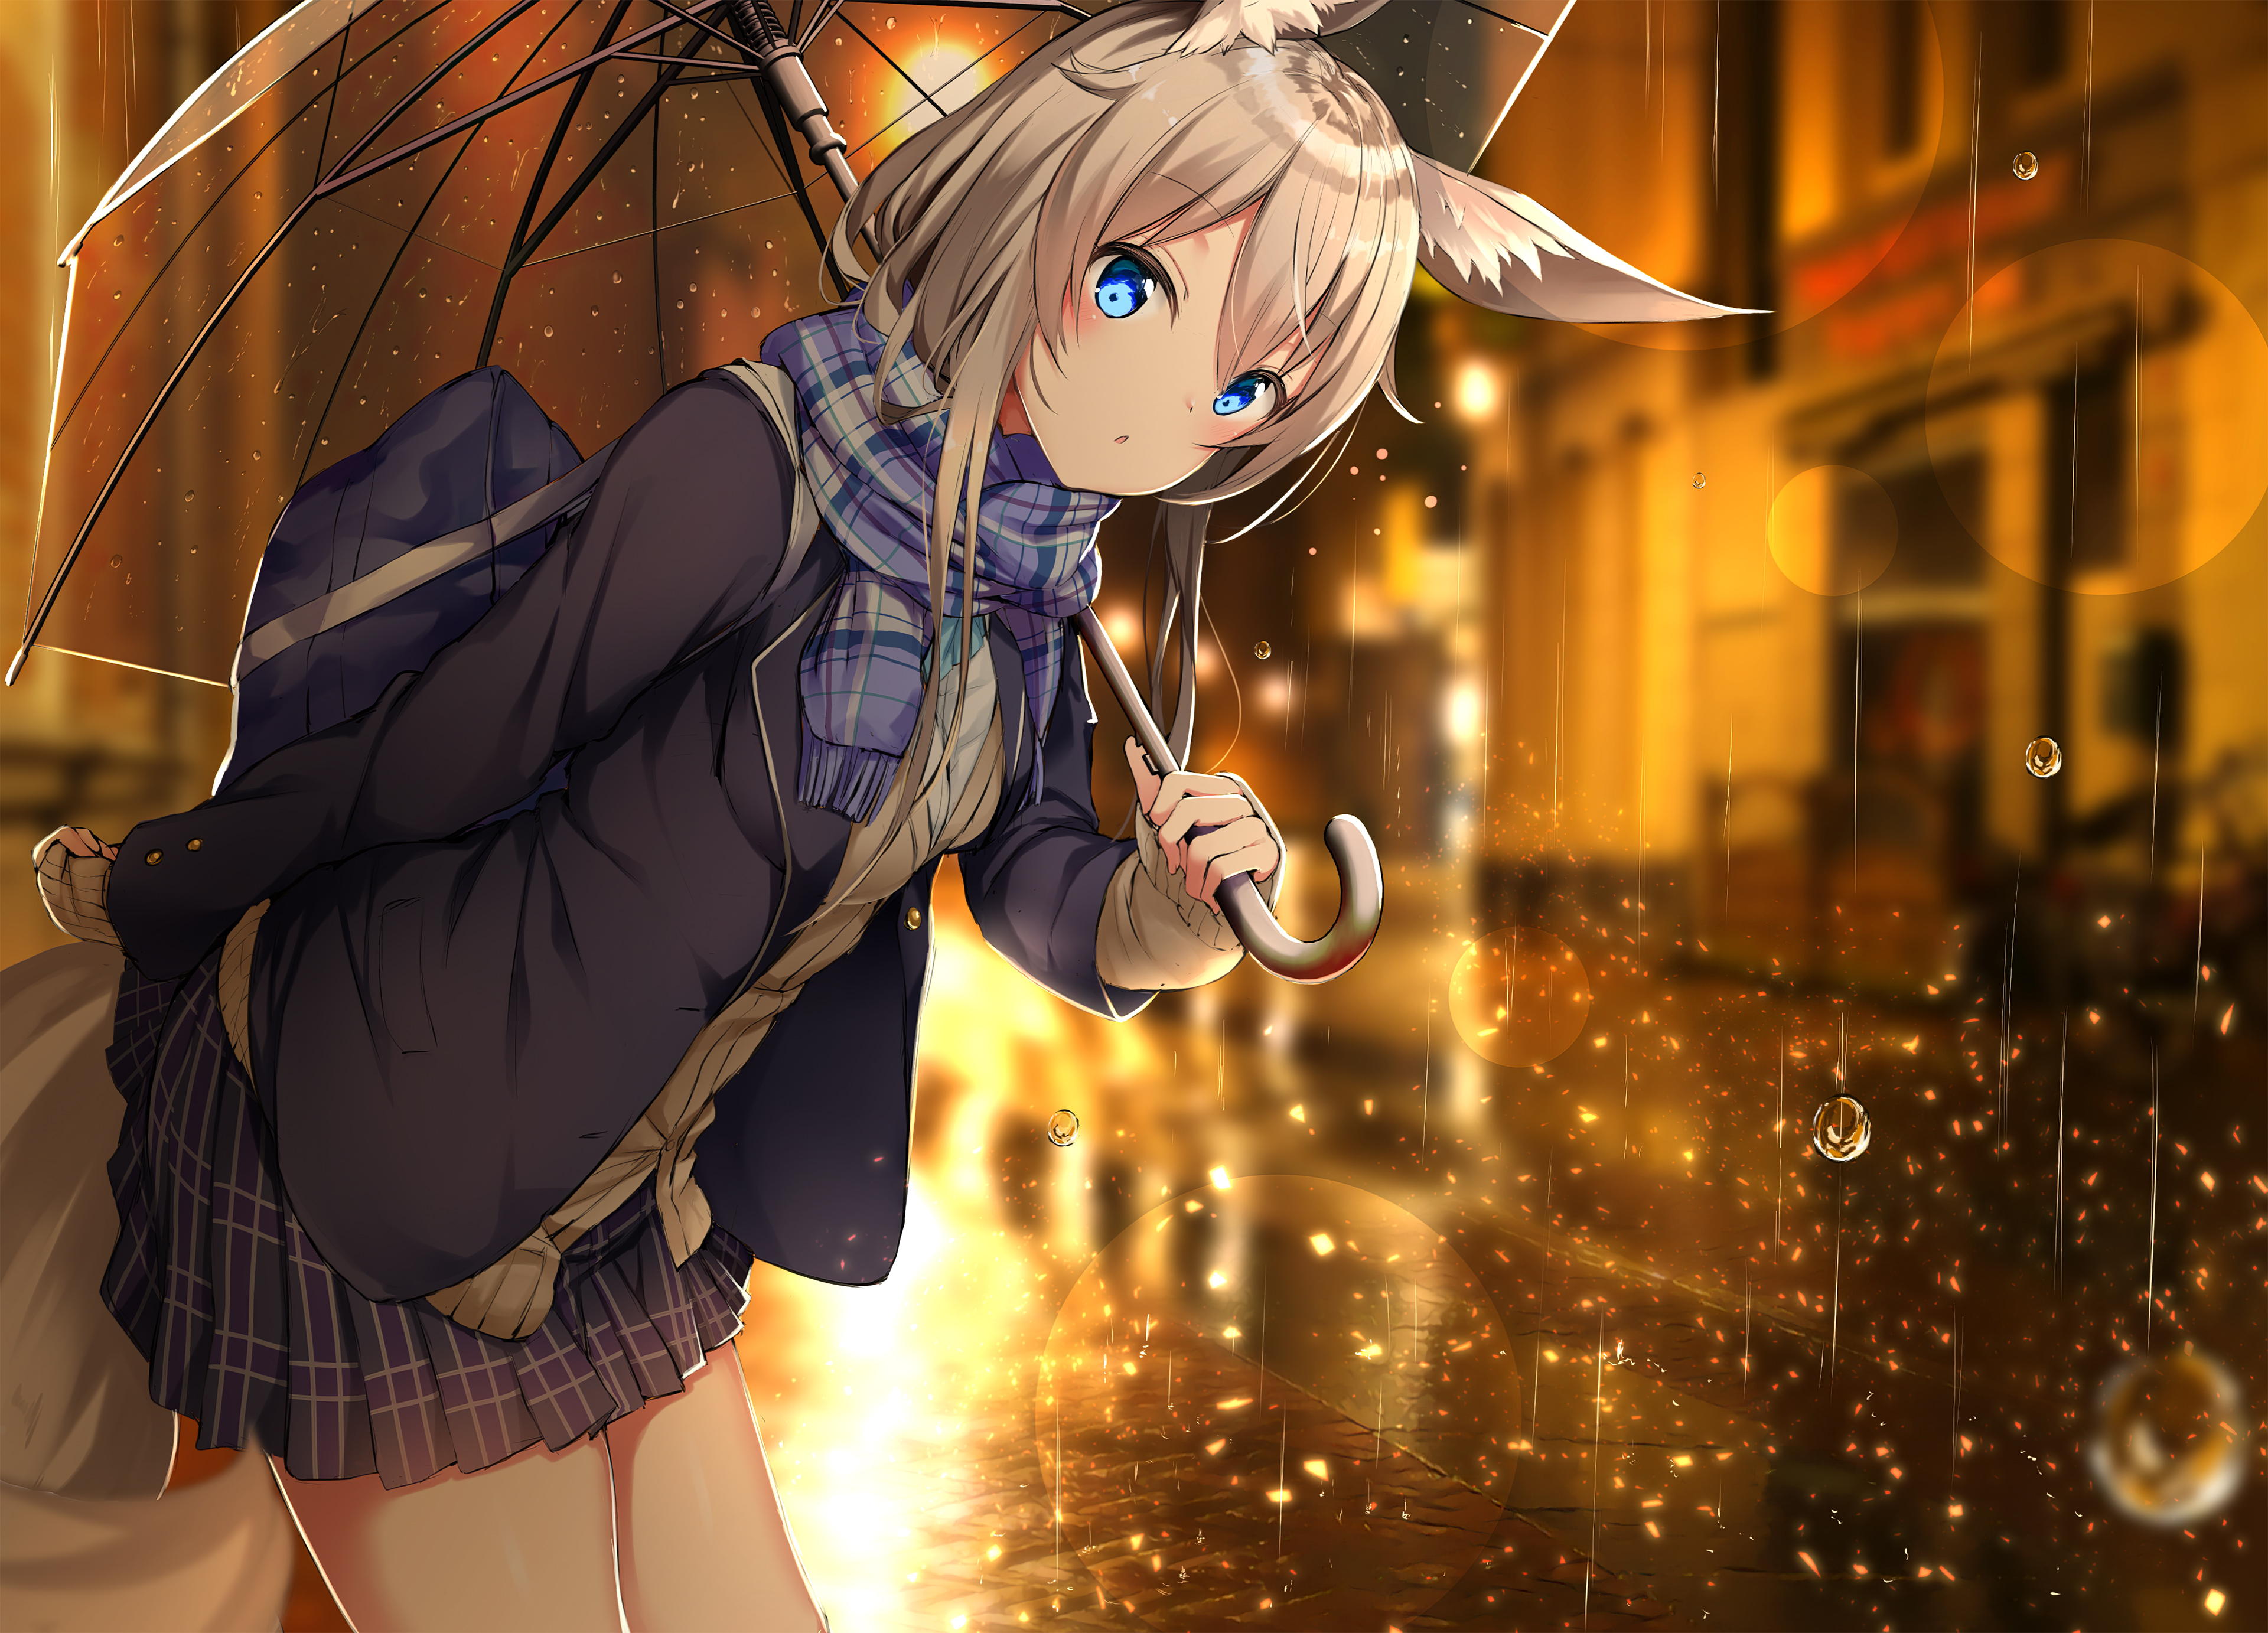 Anime Girl Umbrella Rain, HD Anime, 4k Wallpapers, Images, Backgrounds